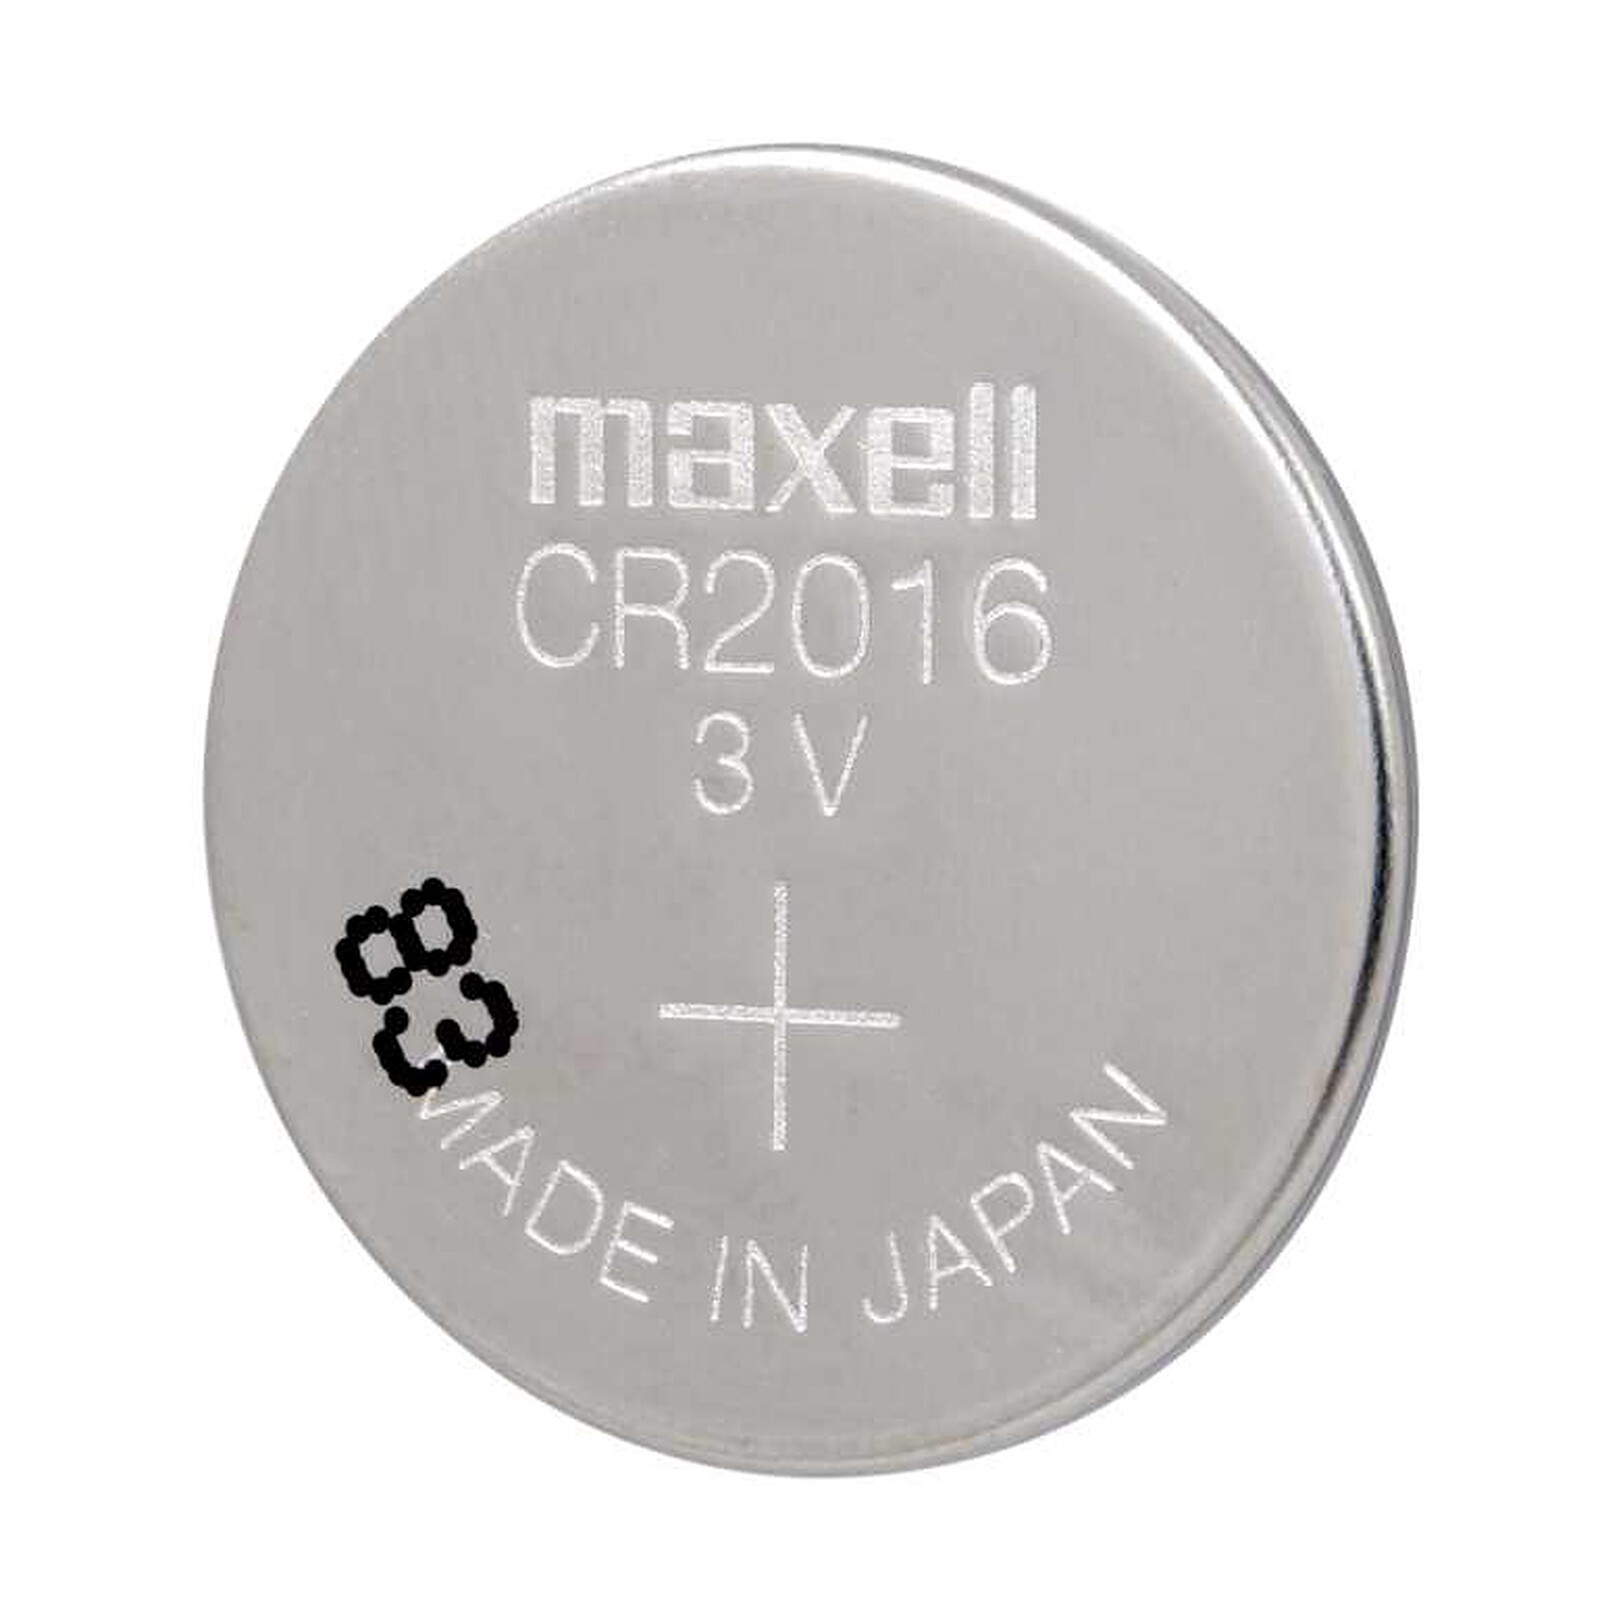 5 Piles Bouton Lithium Maxell 3V / CR1620